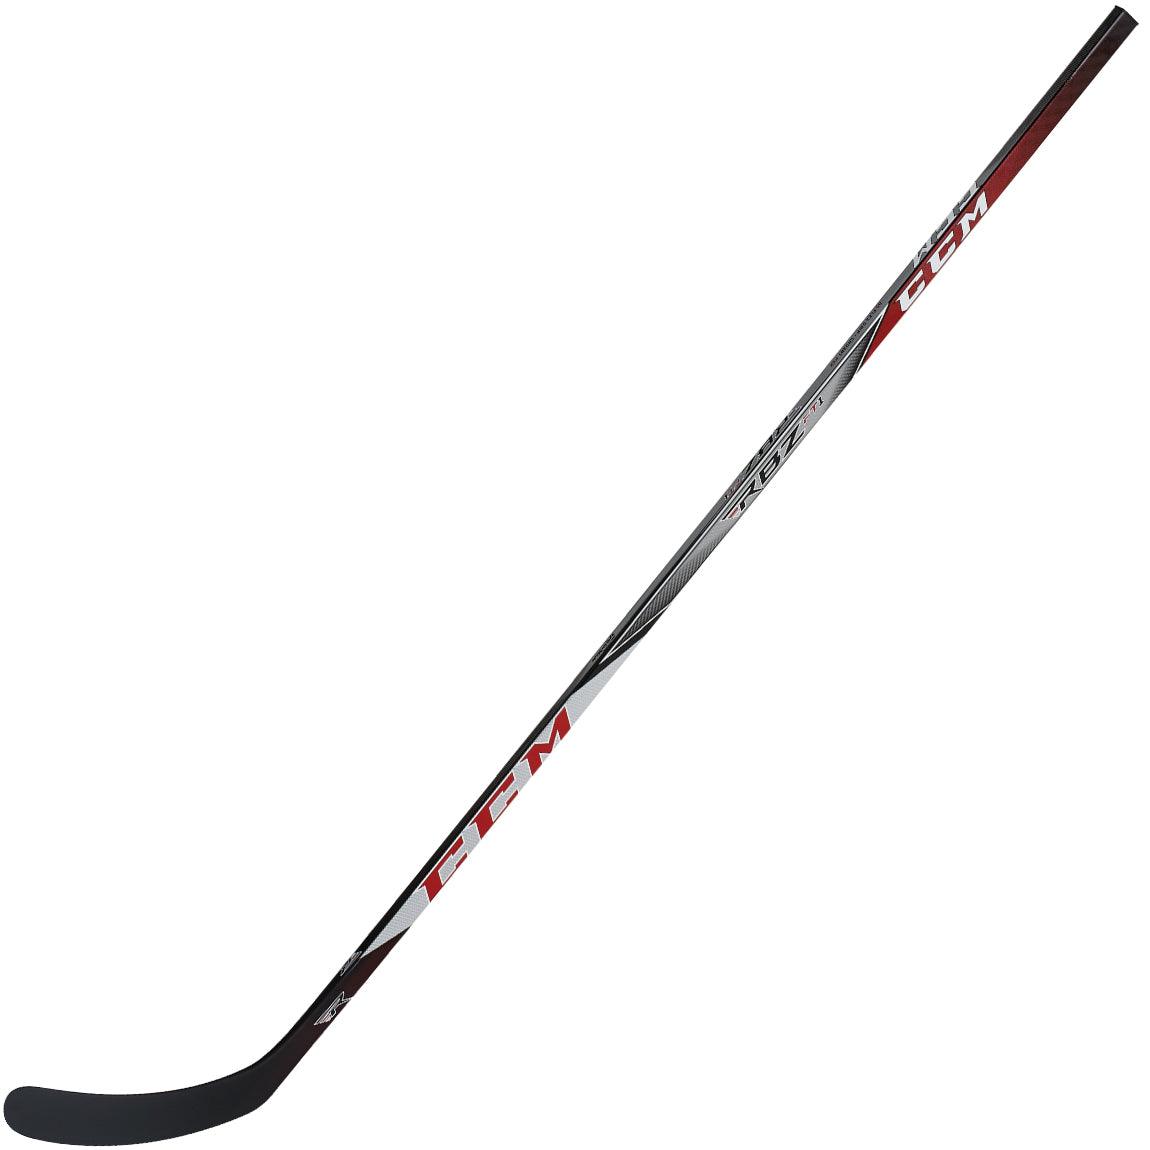 RBZ FT1 Hockey Stick - Senior - Sports Excellence